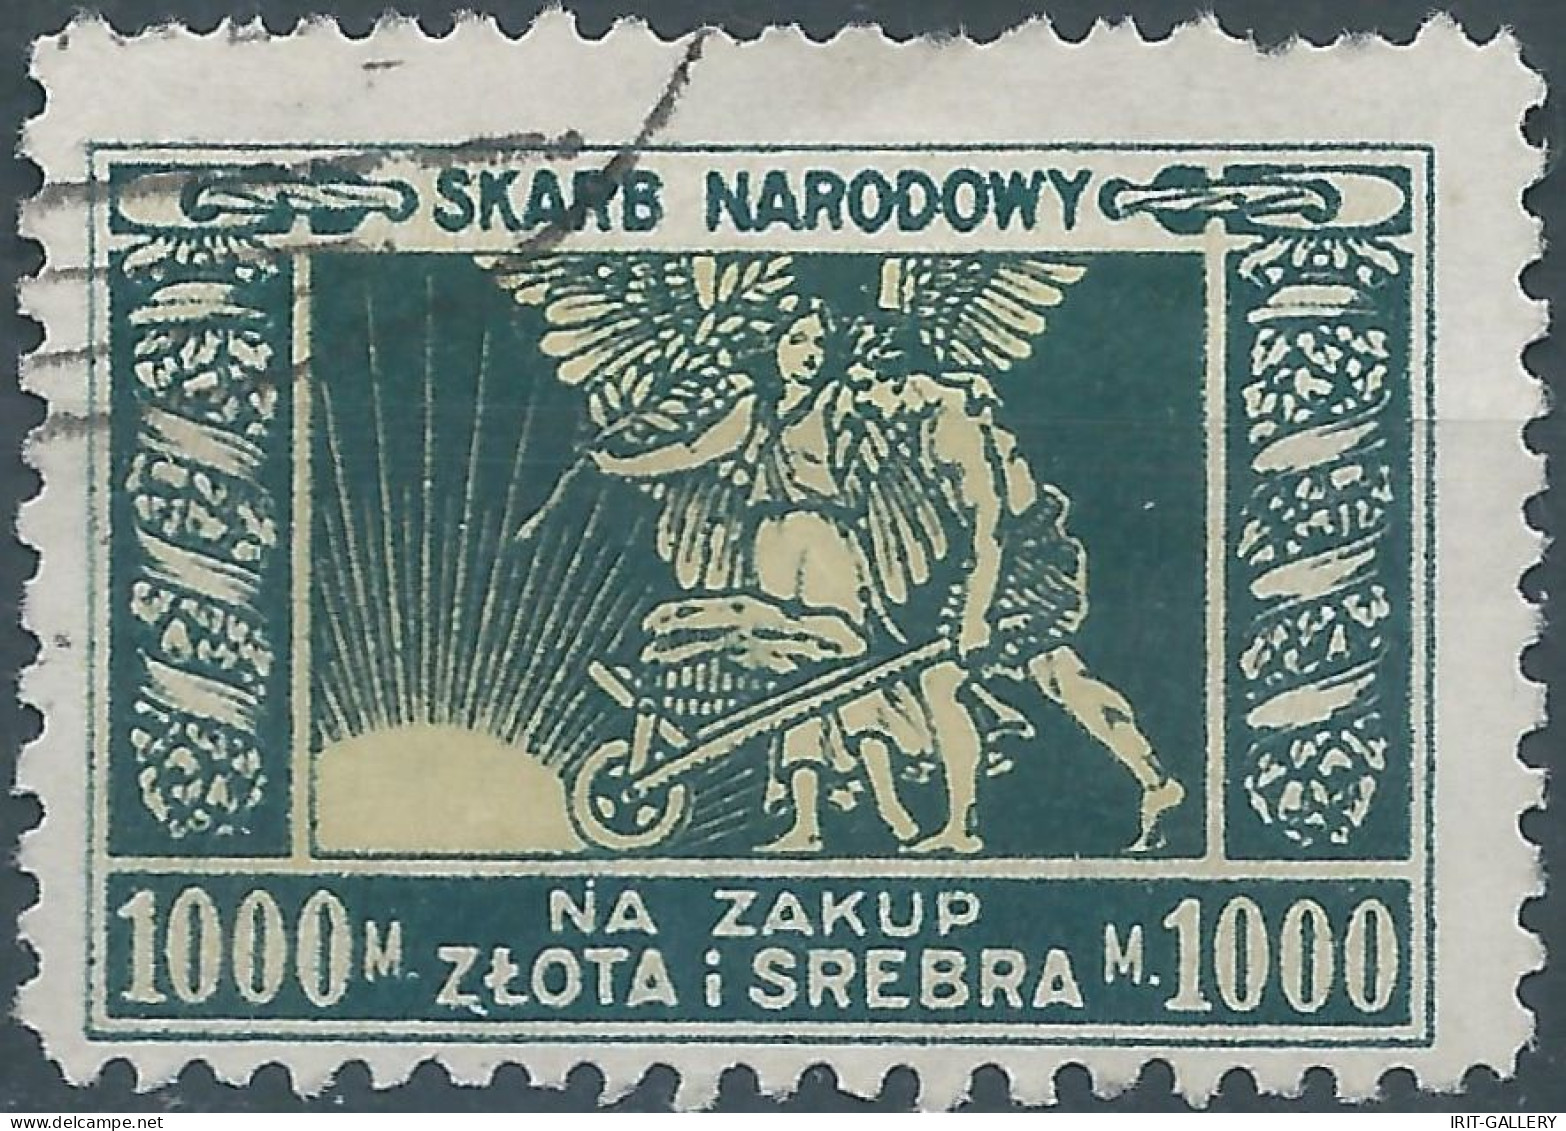 POLONIA-POLAND-POLSKA,1920 Revenue Stamp SKARB NARODOWY NA ZAKUP ZLOTA I SREBRA-NATIONAL TREASURE,1000M,Obliterated - Fiscali